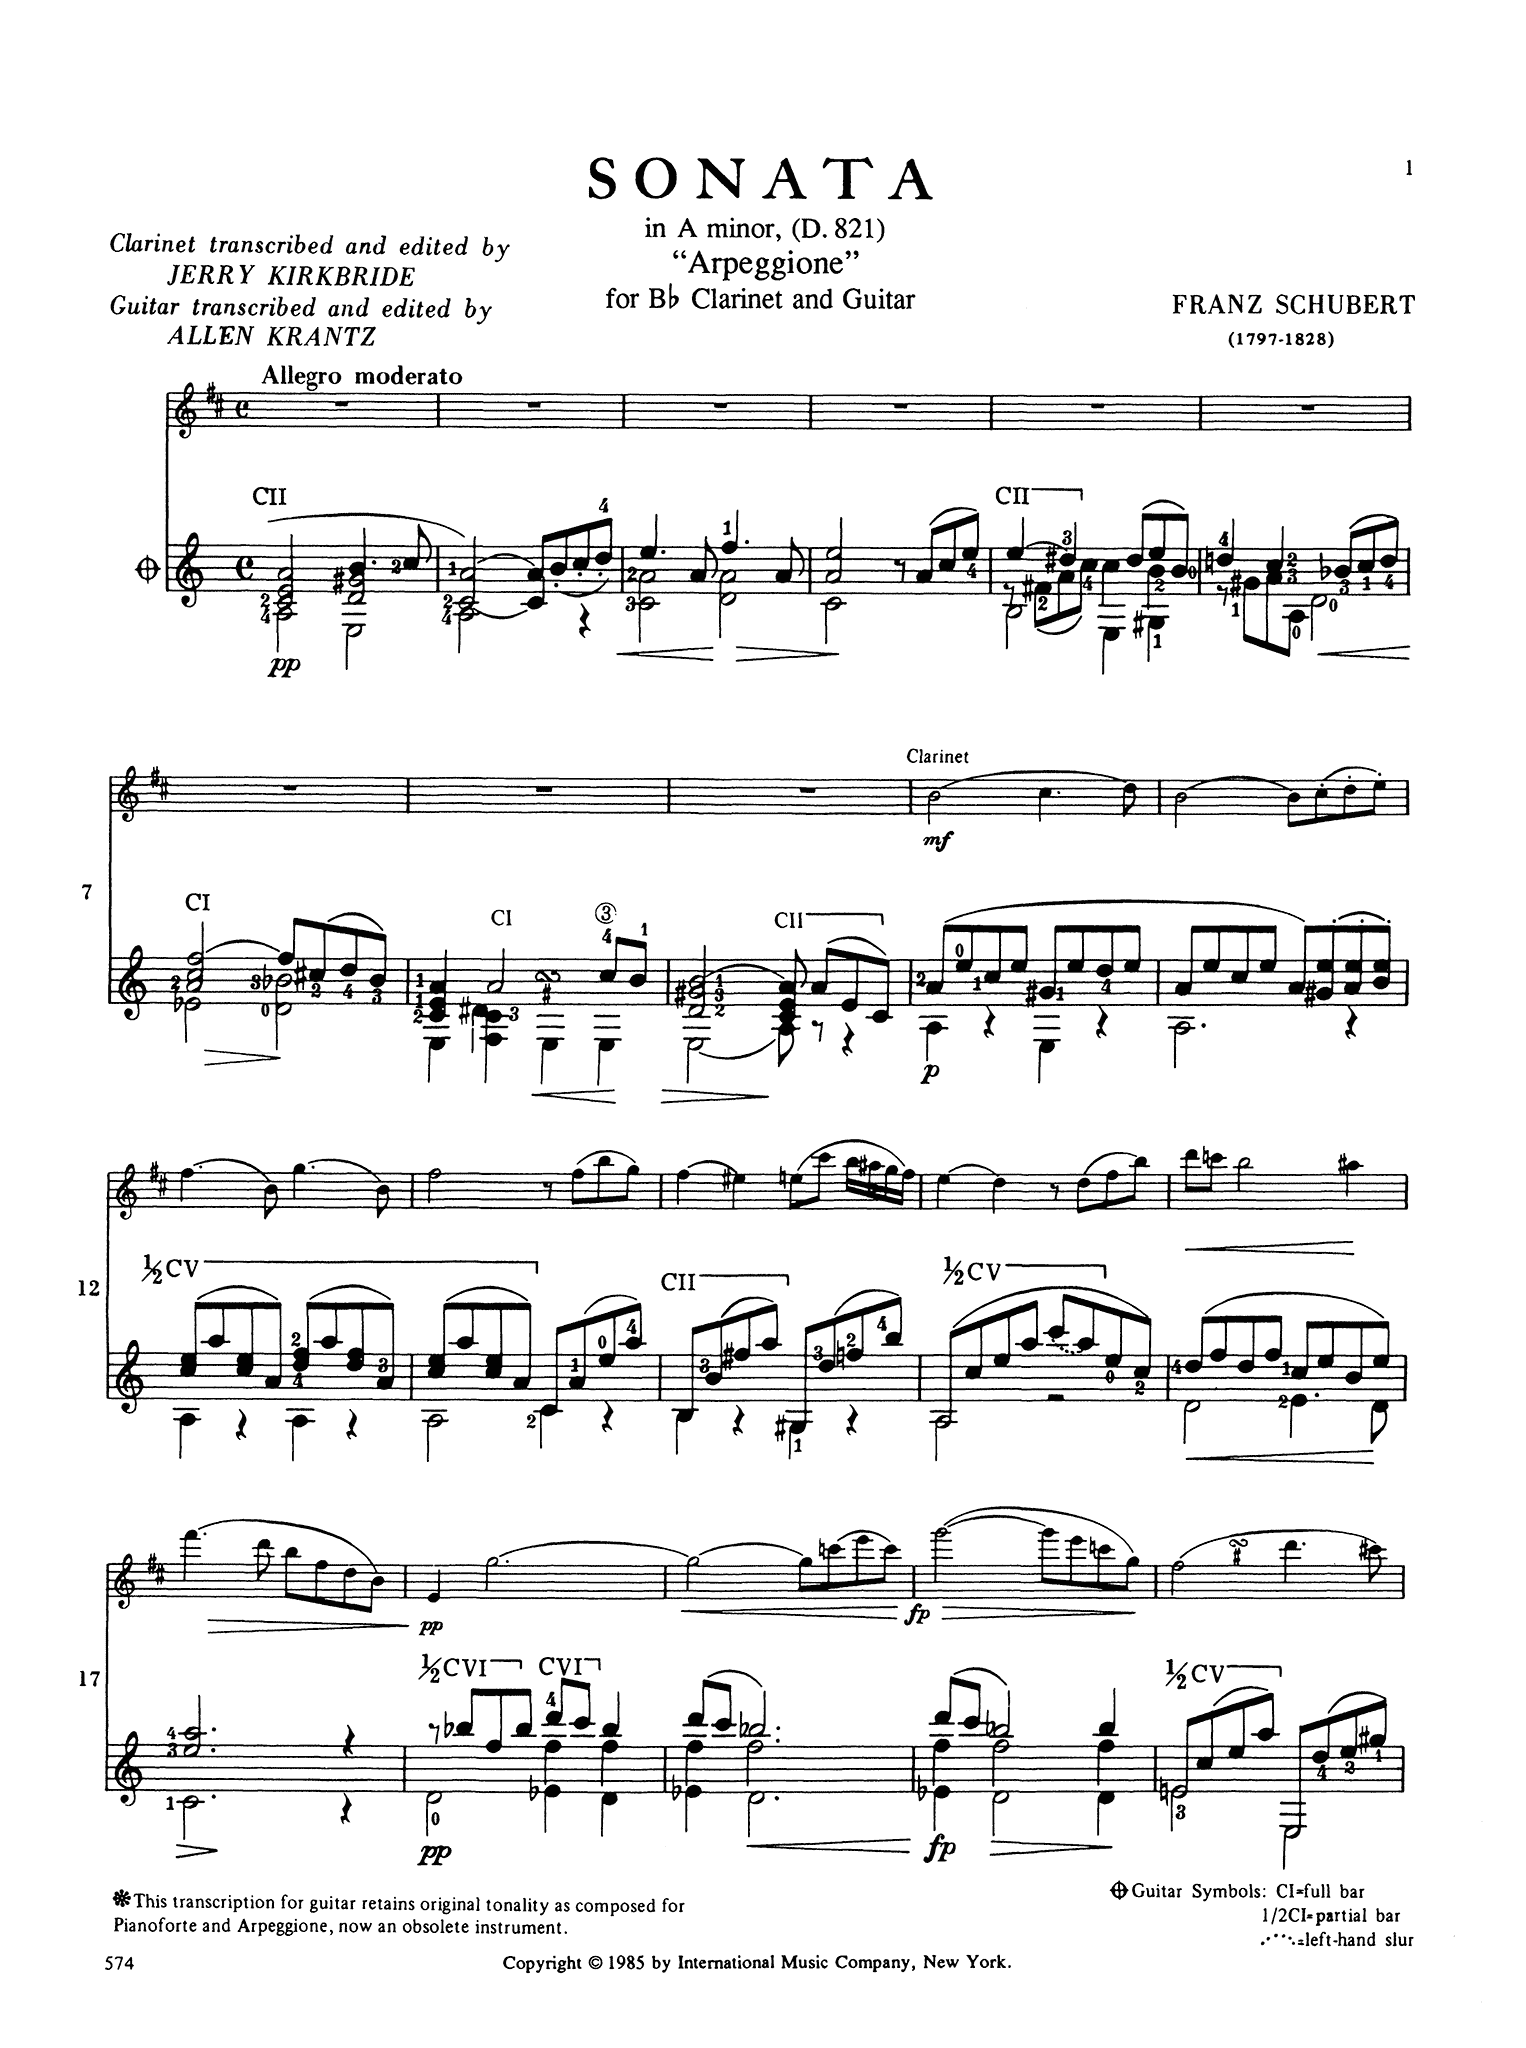 Schubert Arpeggione Sonata B-flat Clarinet & Guitar - Movement 1